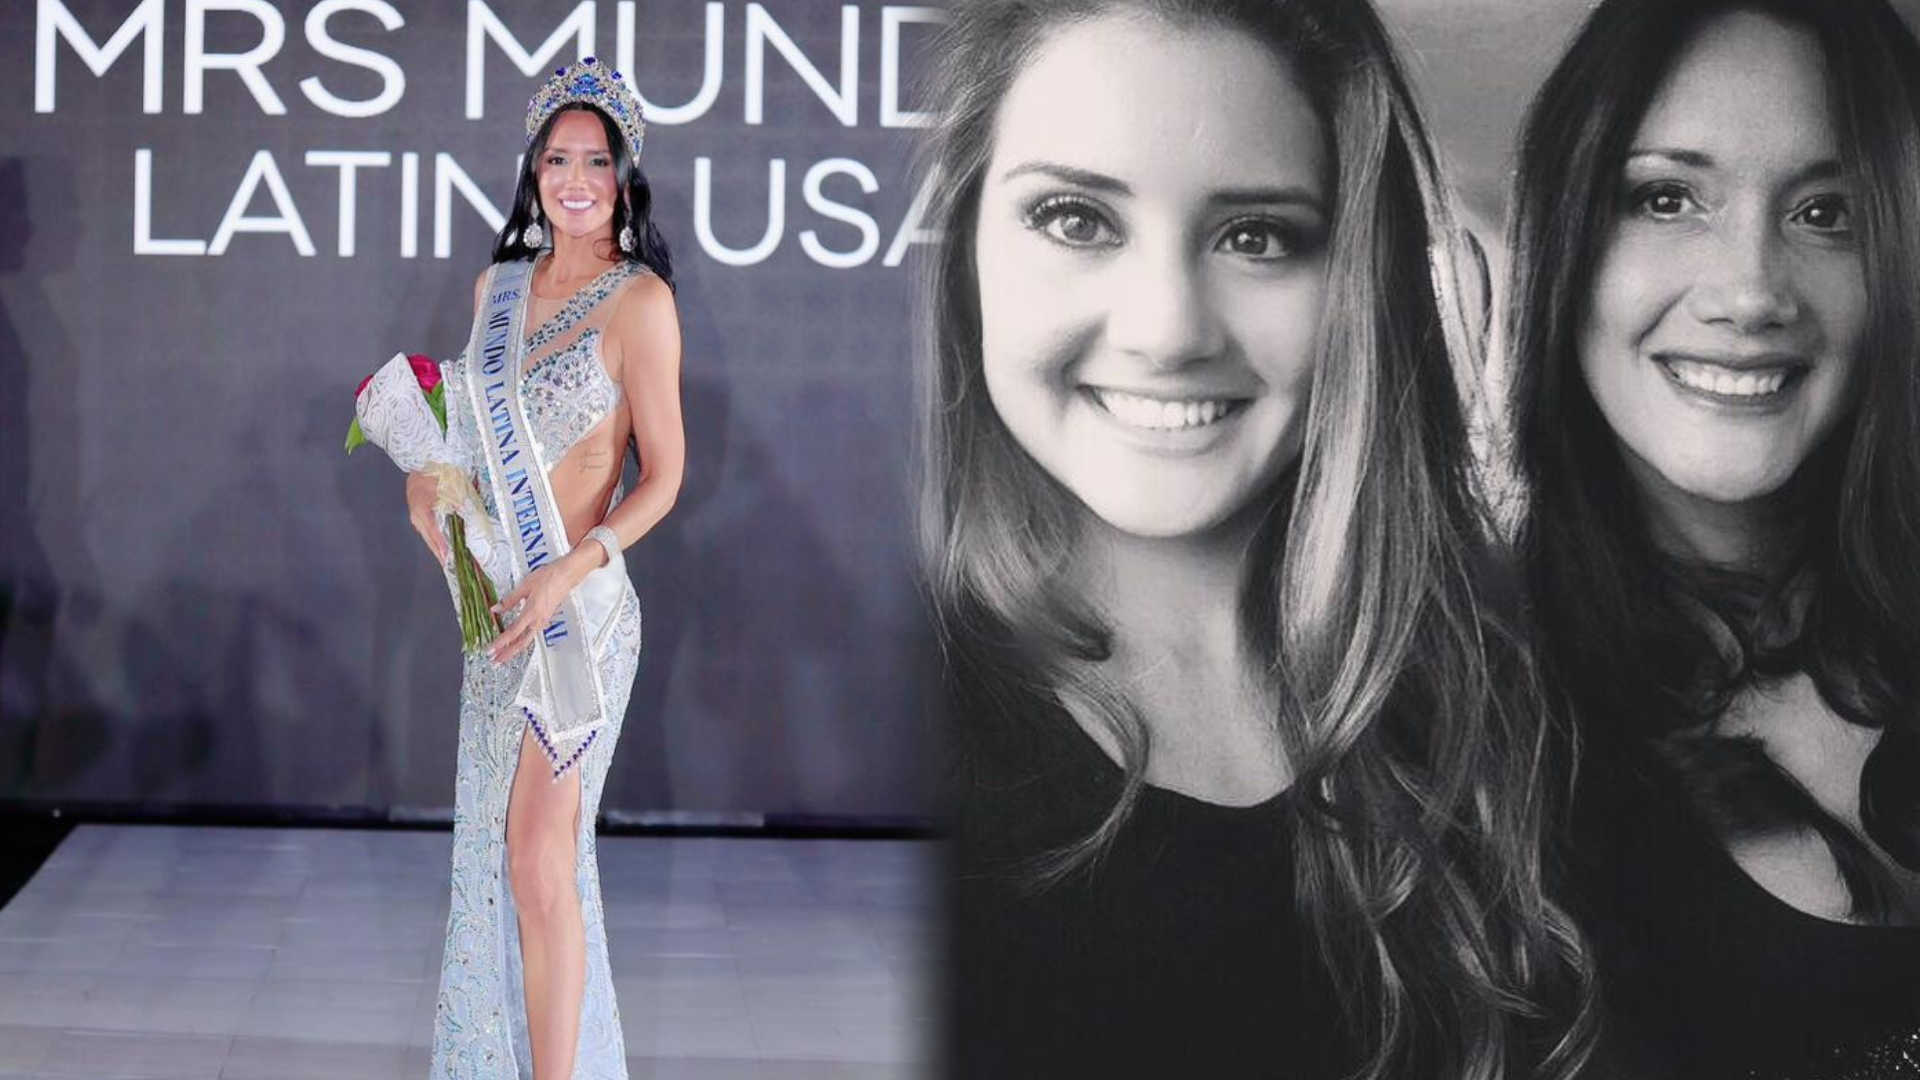 
                                 Angie Pajares, madre de Ximena Hoyos, hace historia en el Mrs Mundo Latino Internacional: “Me siento honrada” 
                            